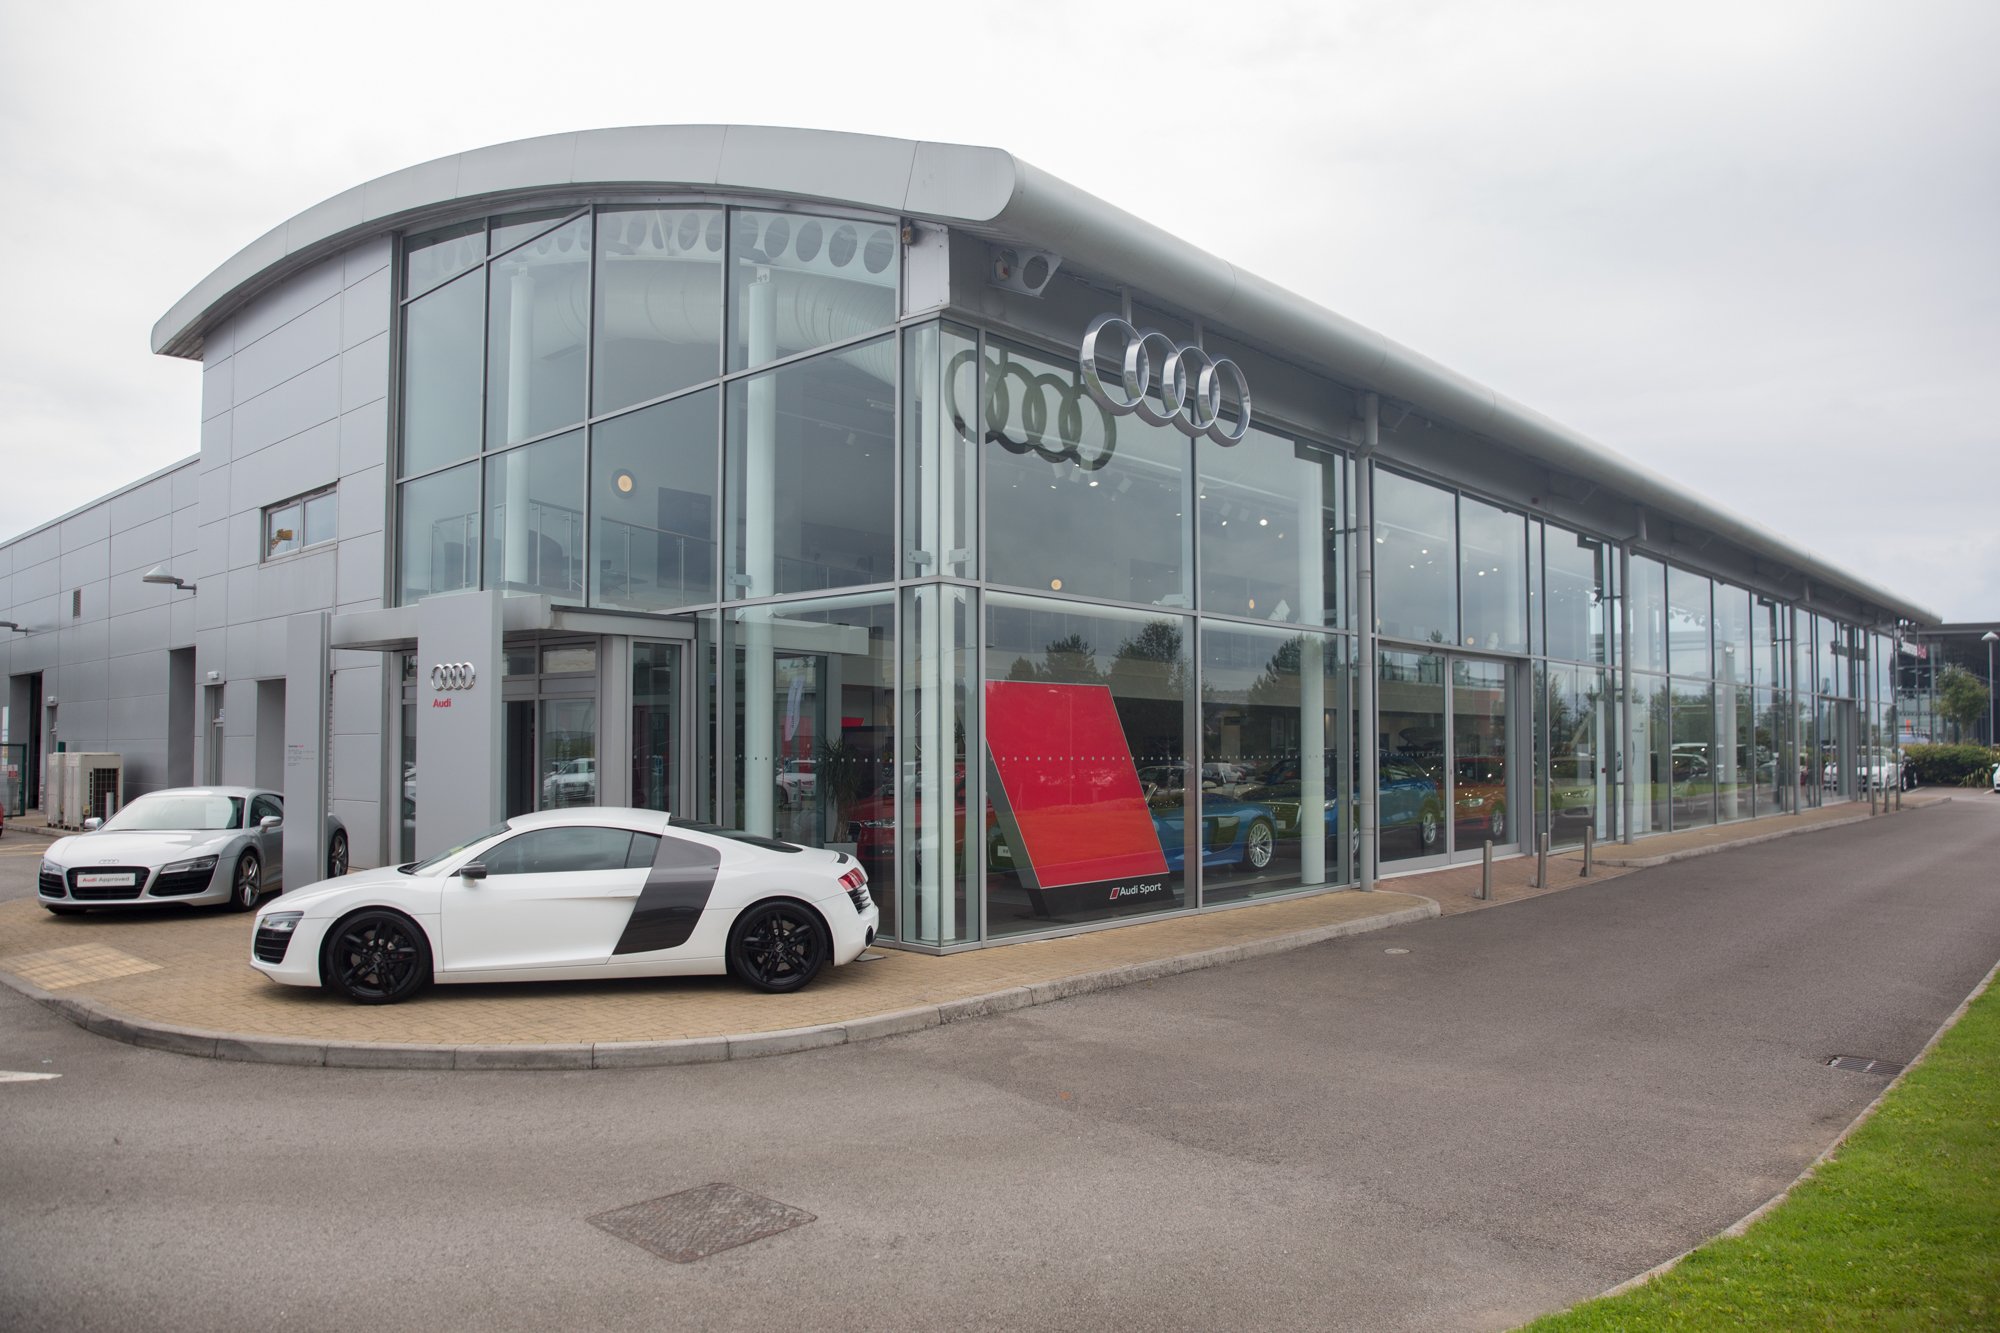 Motability Scheme at Sinclair Audi Swansea